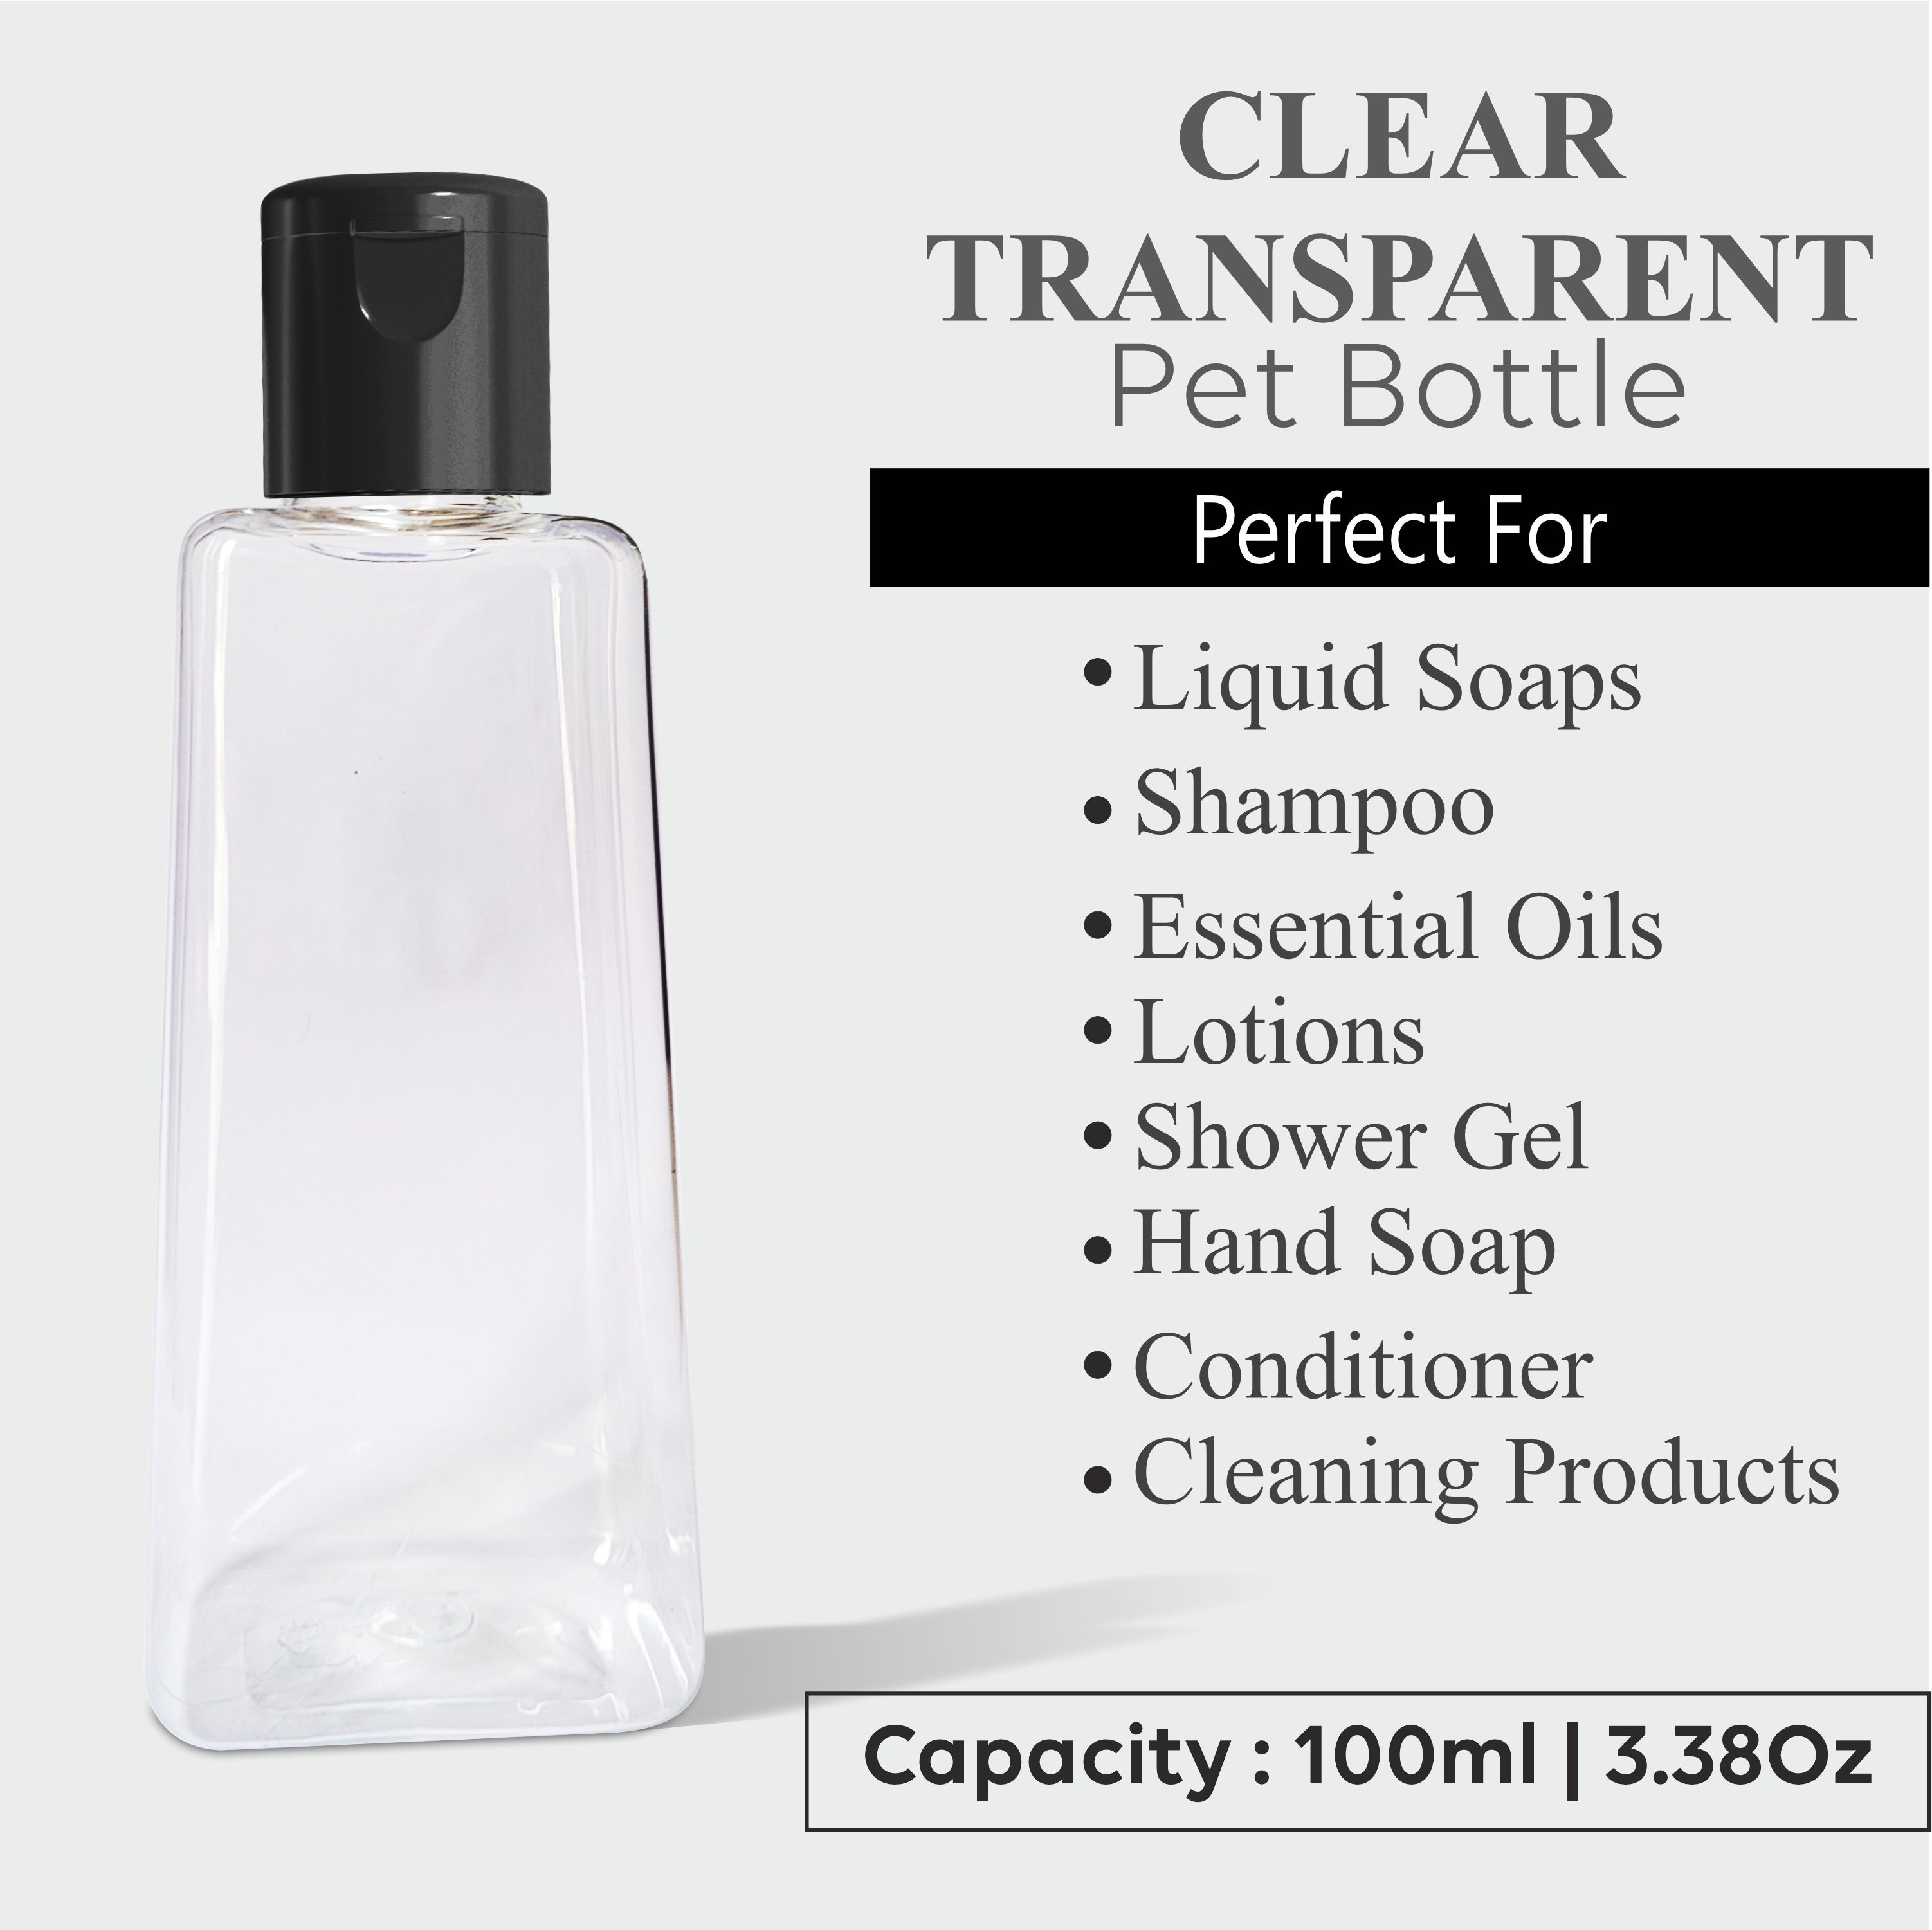 Pyramid Shape Clear Transparent Pet Bottle With Black Fliptop Cap 100ml [ZMT90]